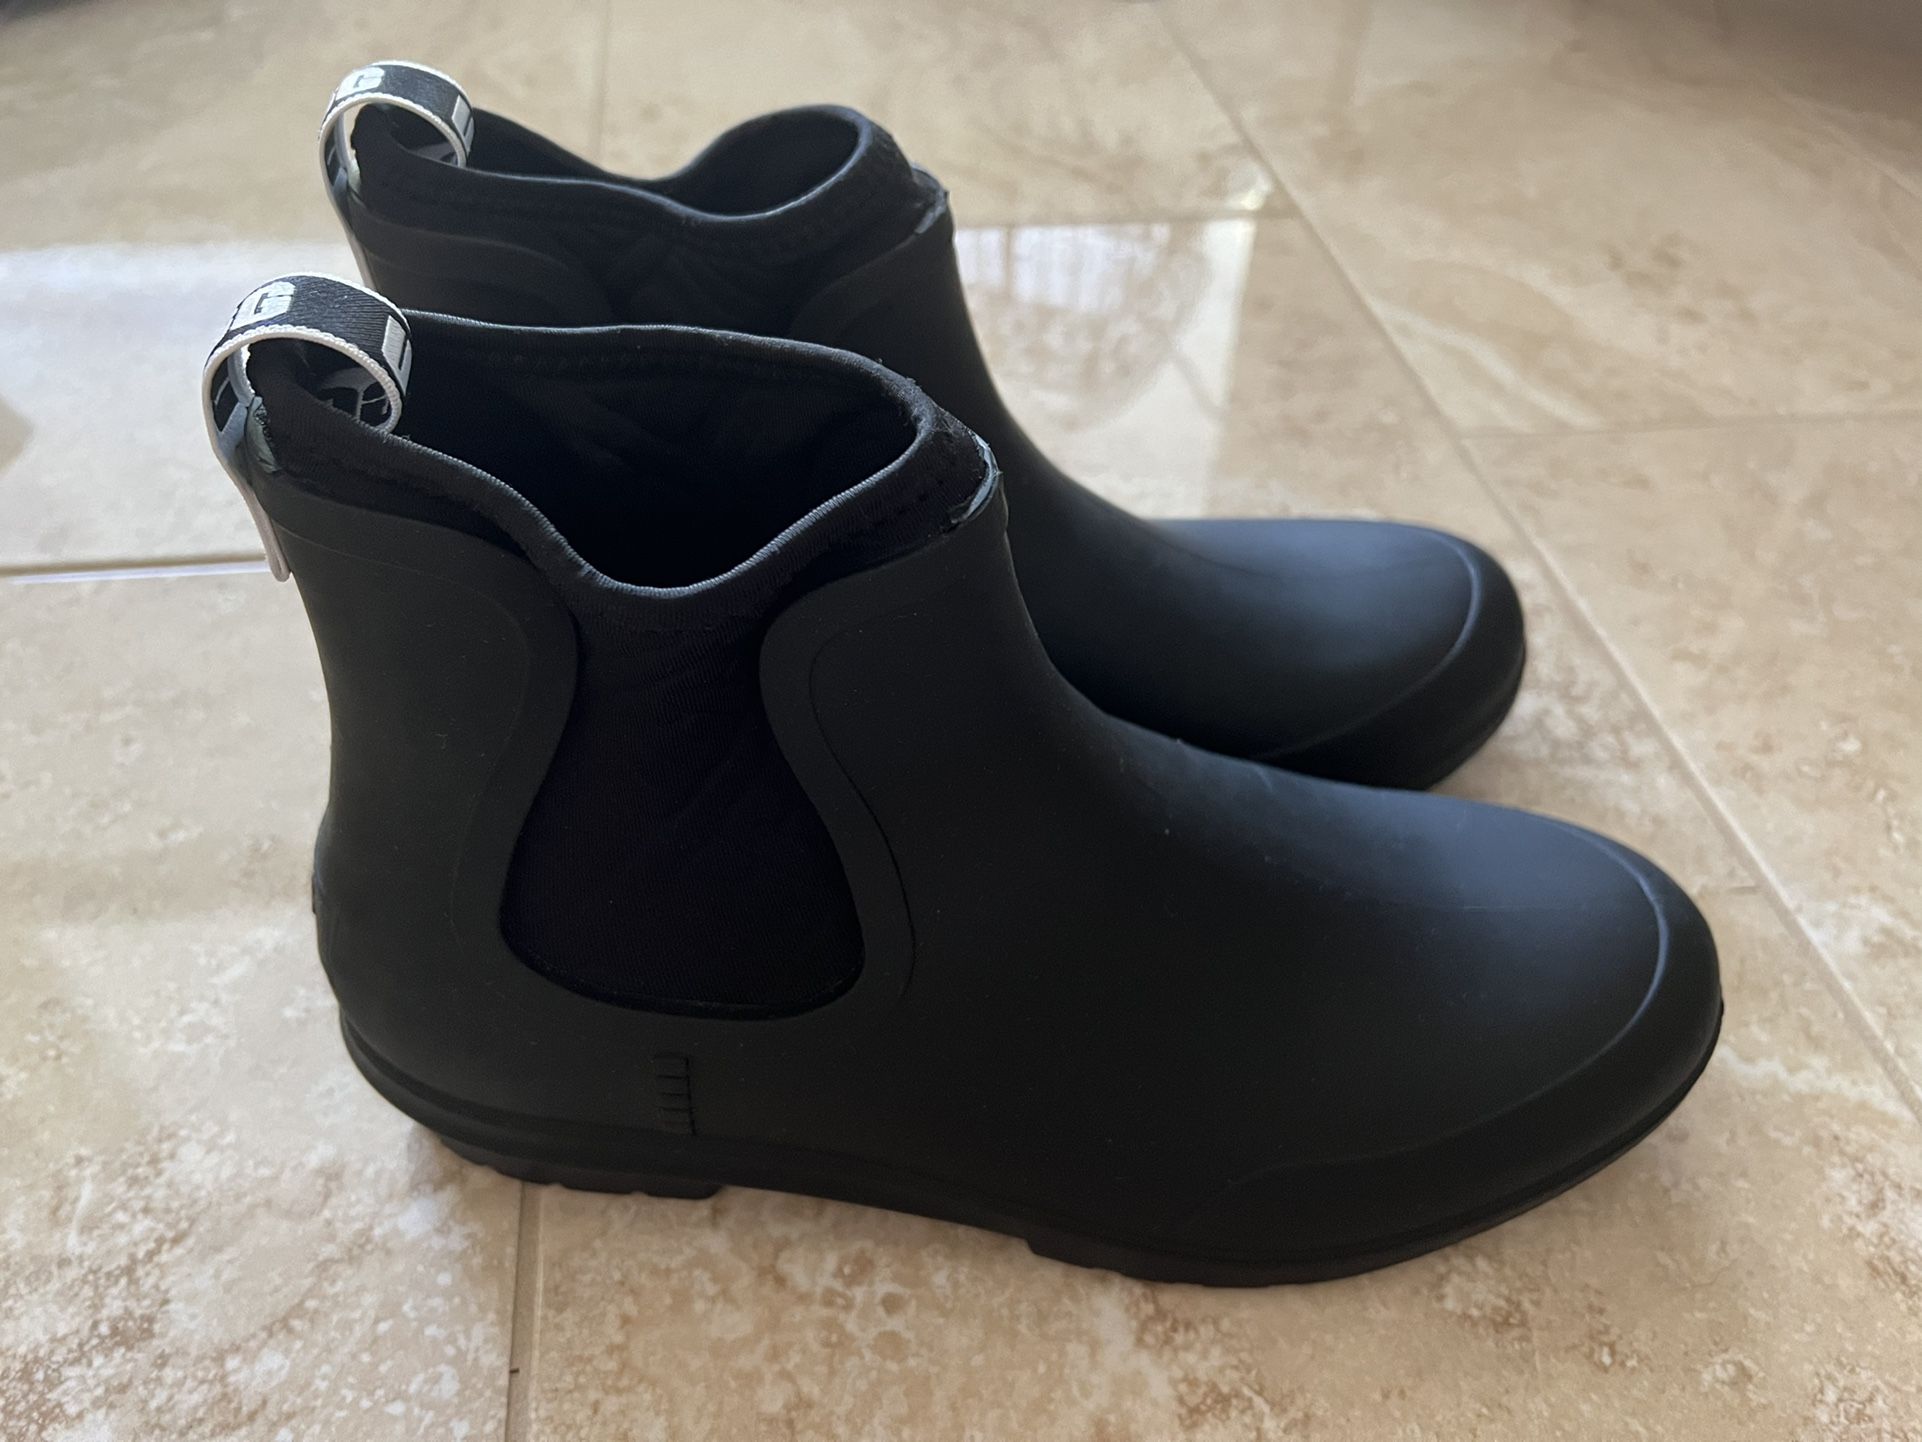 Ugg Insulated Rain Boots 